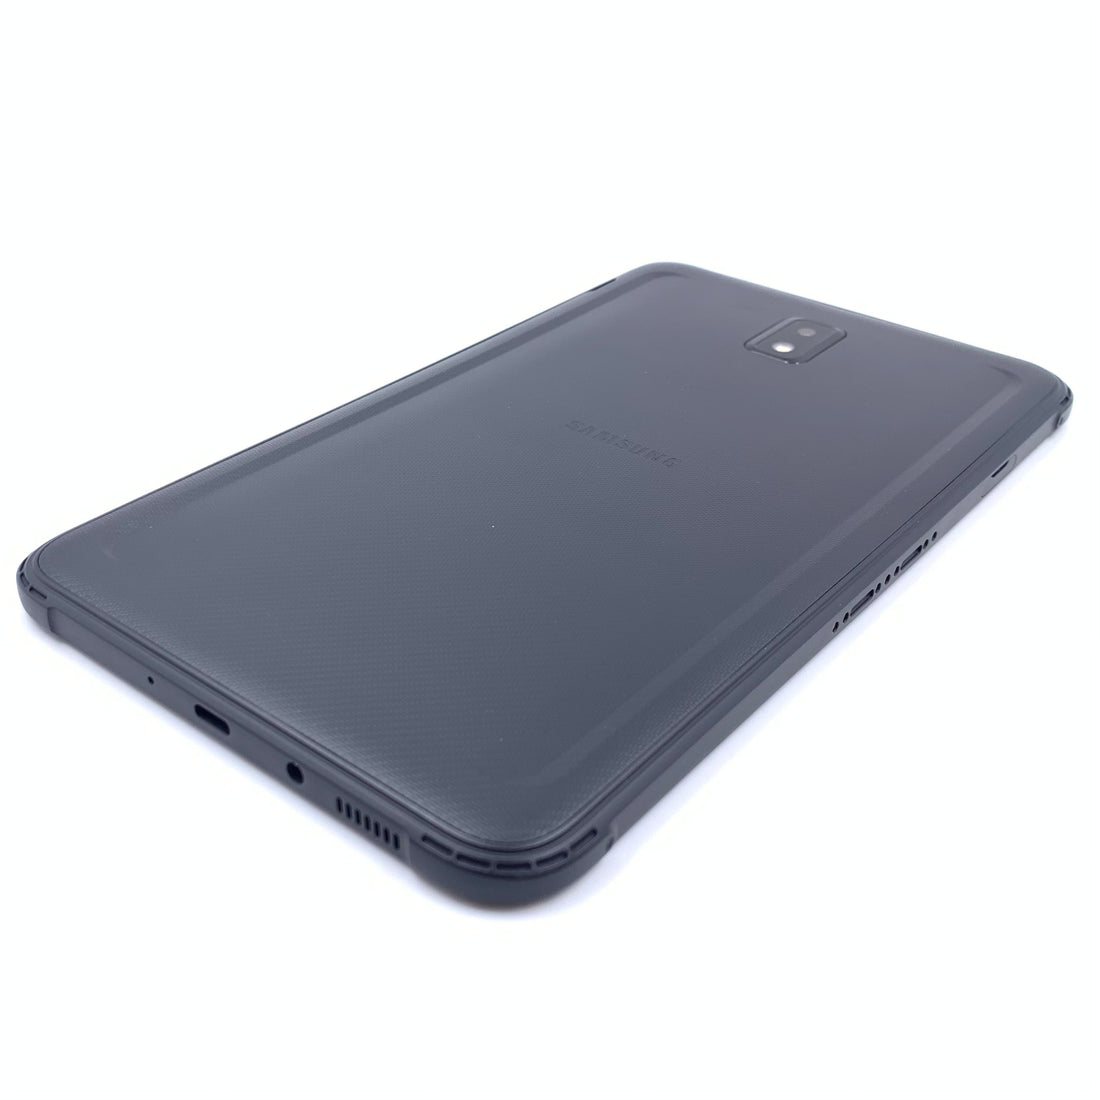 Samsung Galaxy Tab Active Pro SM-T545 64GB (seminuevo)